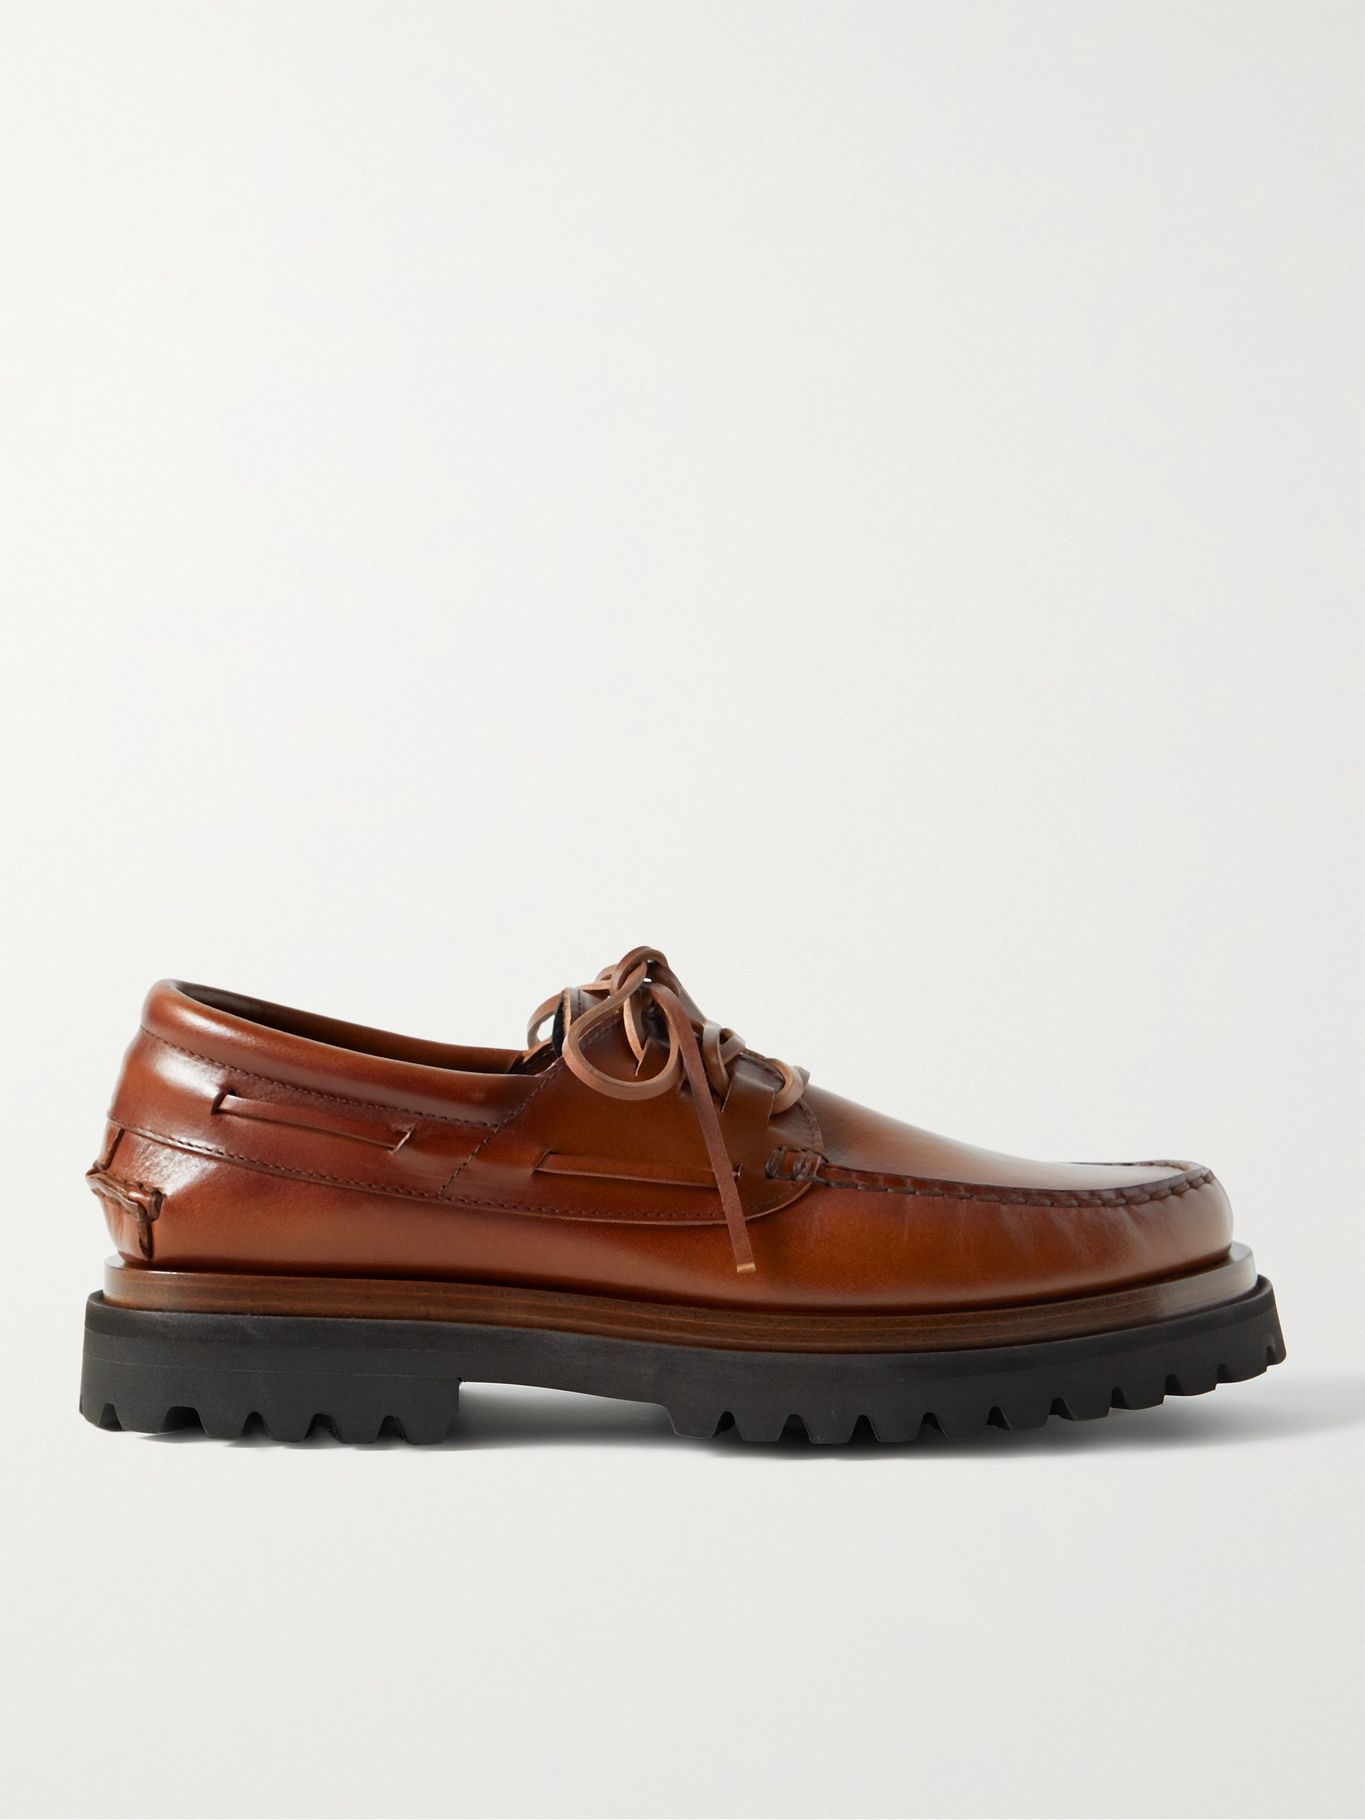 Brown Heritage Leather Boat Shoes | OFFICINE CREATIVE | MR PORTER